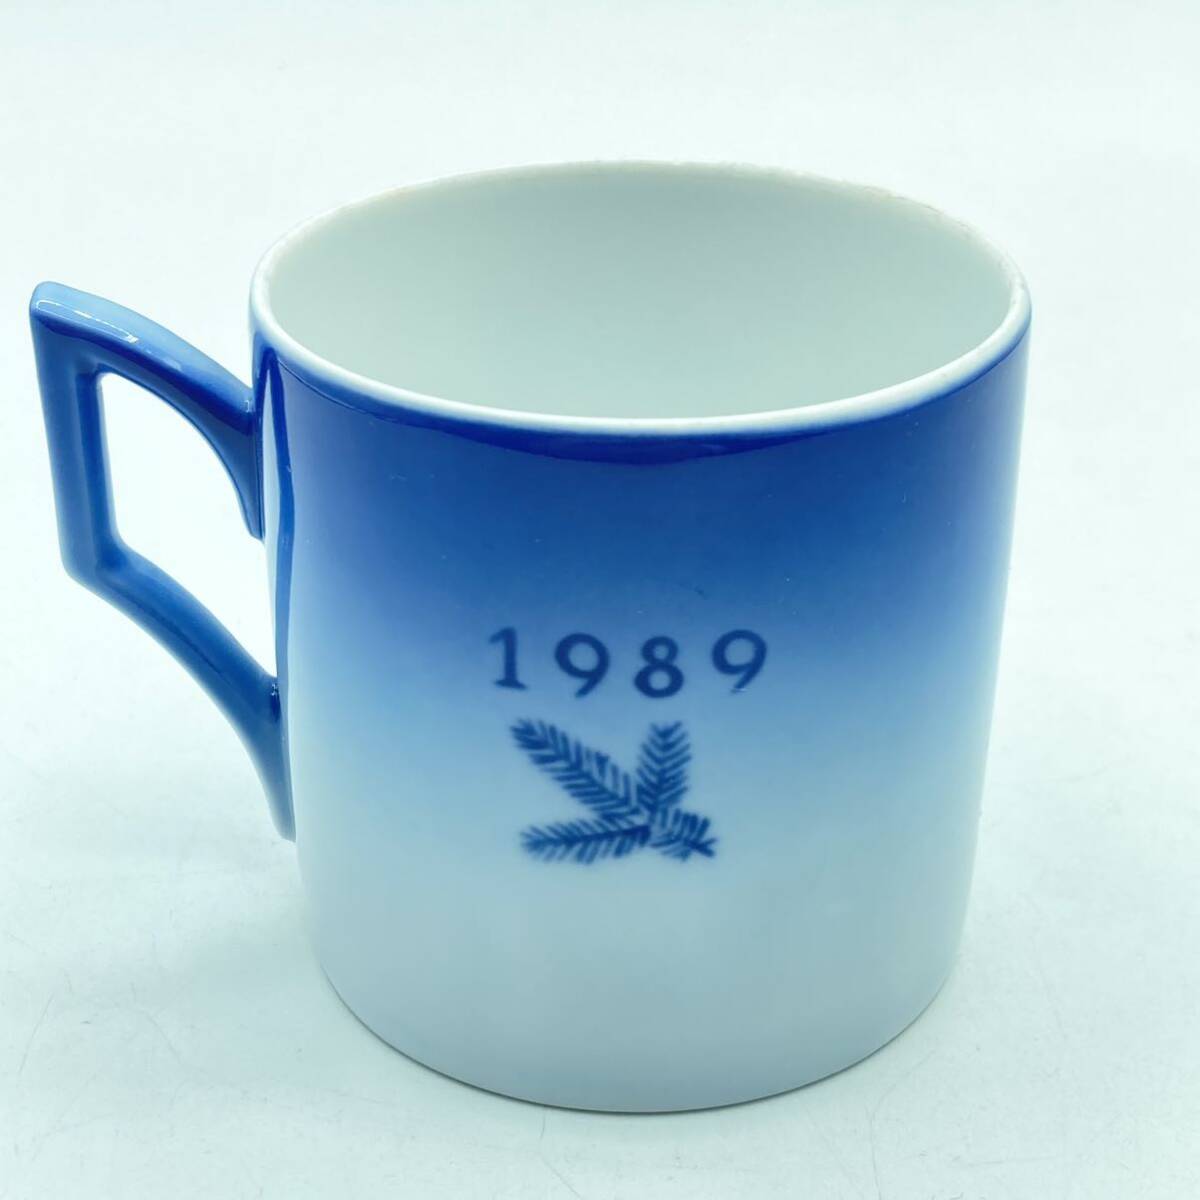 m0401603-2 ROYAL COPENHAGEN ロイヤルコッペンハーゲン 1989年 イヤーカップ&ソーサー ブランド洋食器 コーヒー&ティー兼用 中古品_画像5